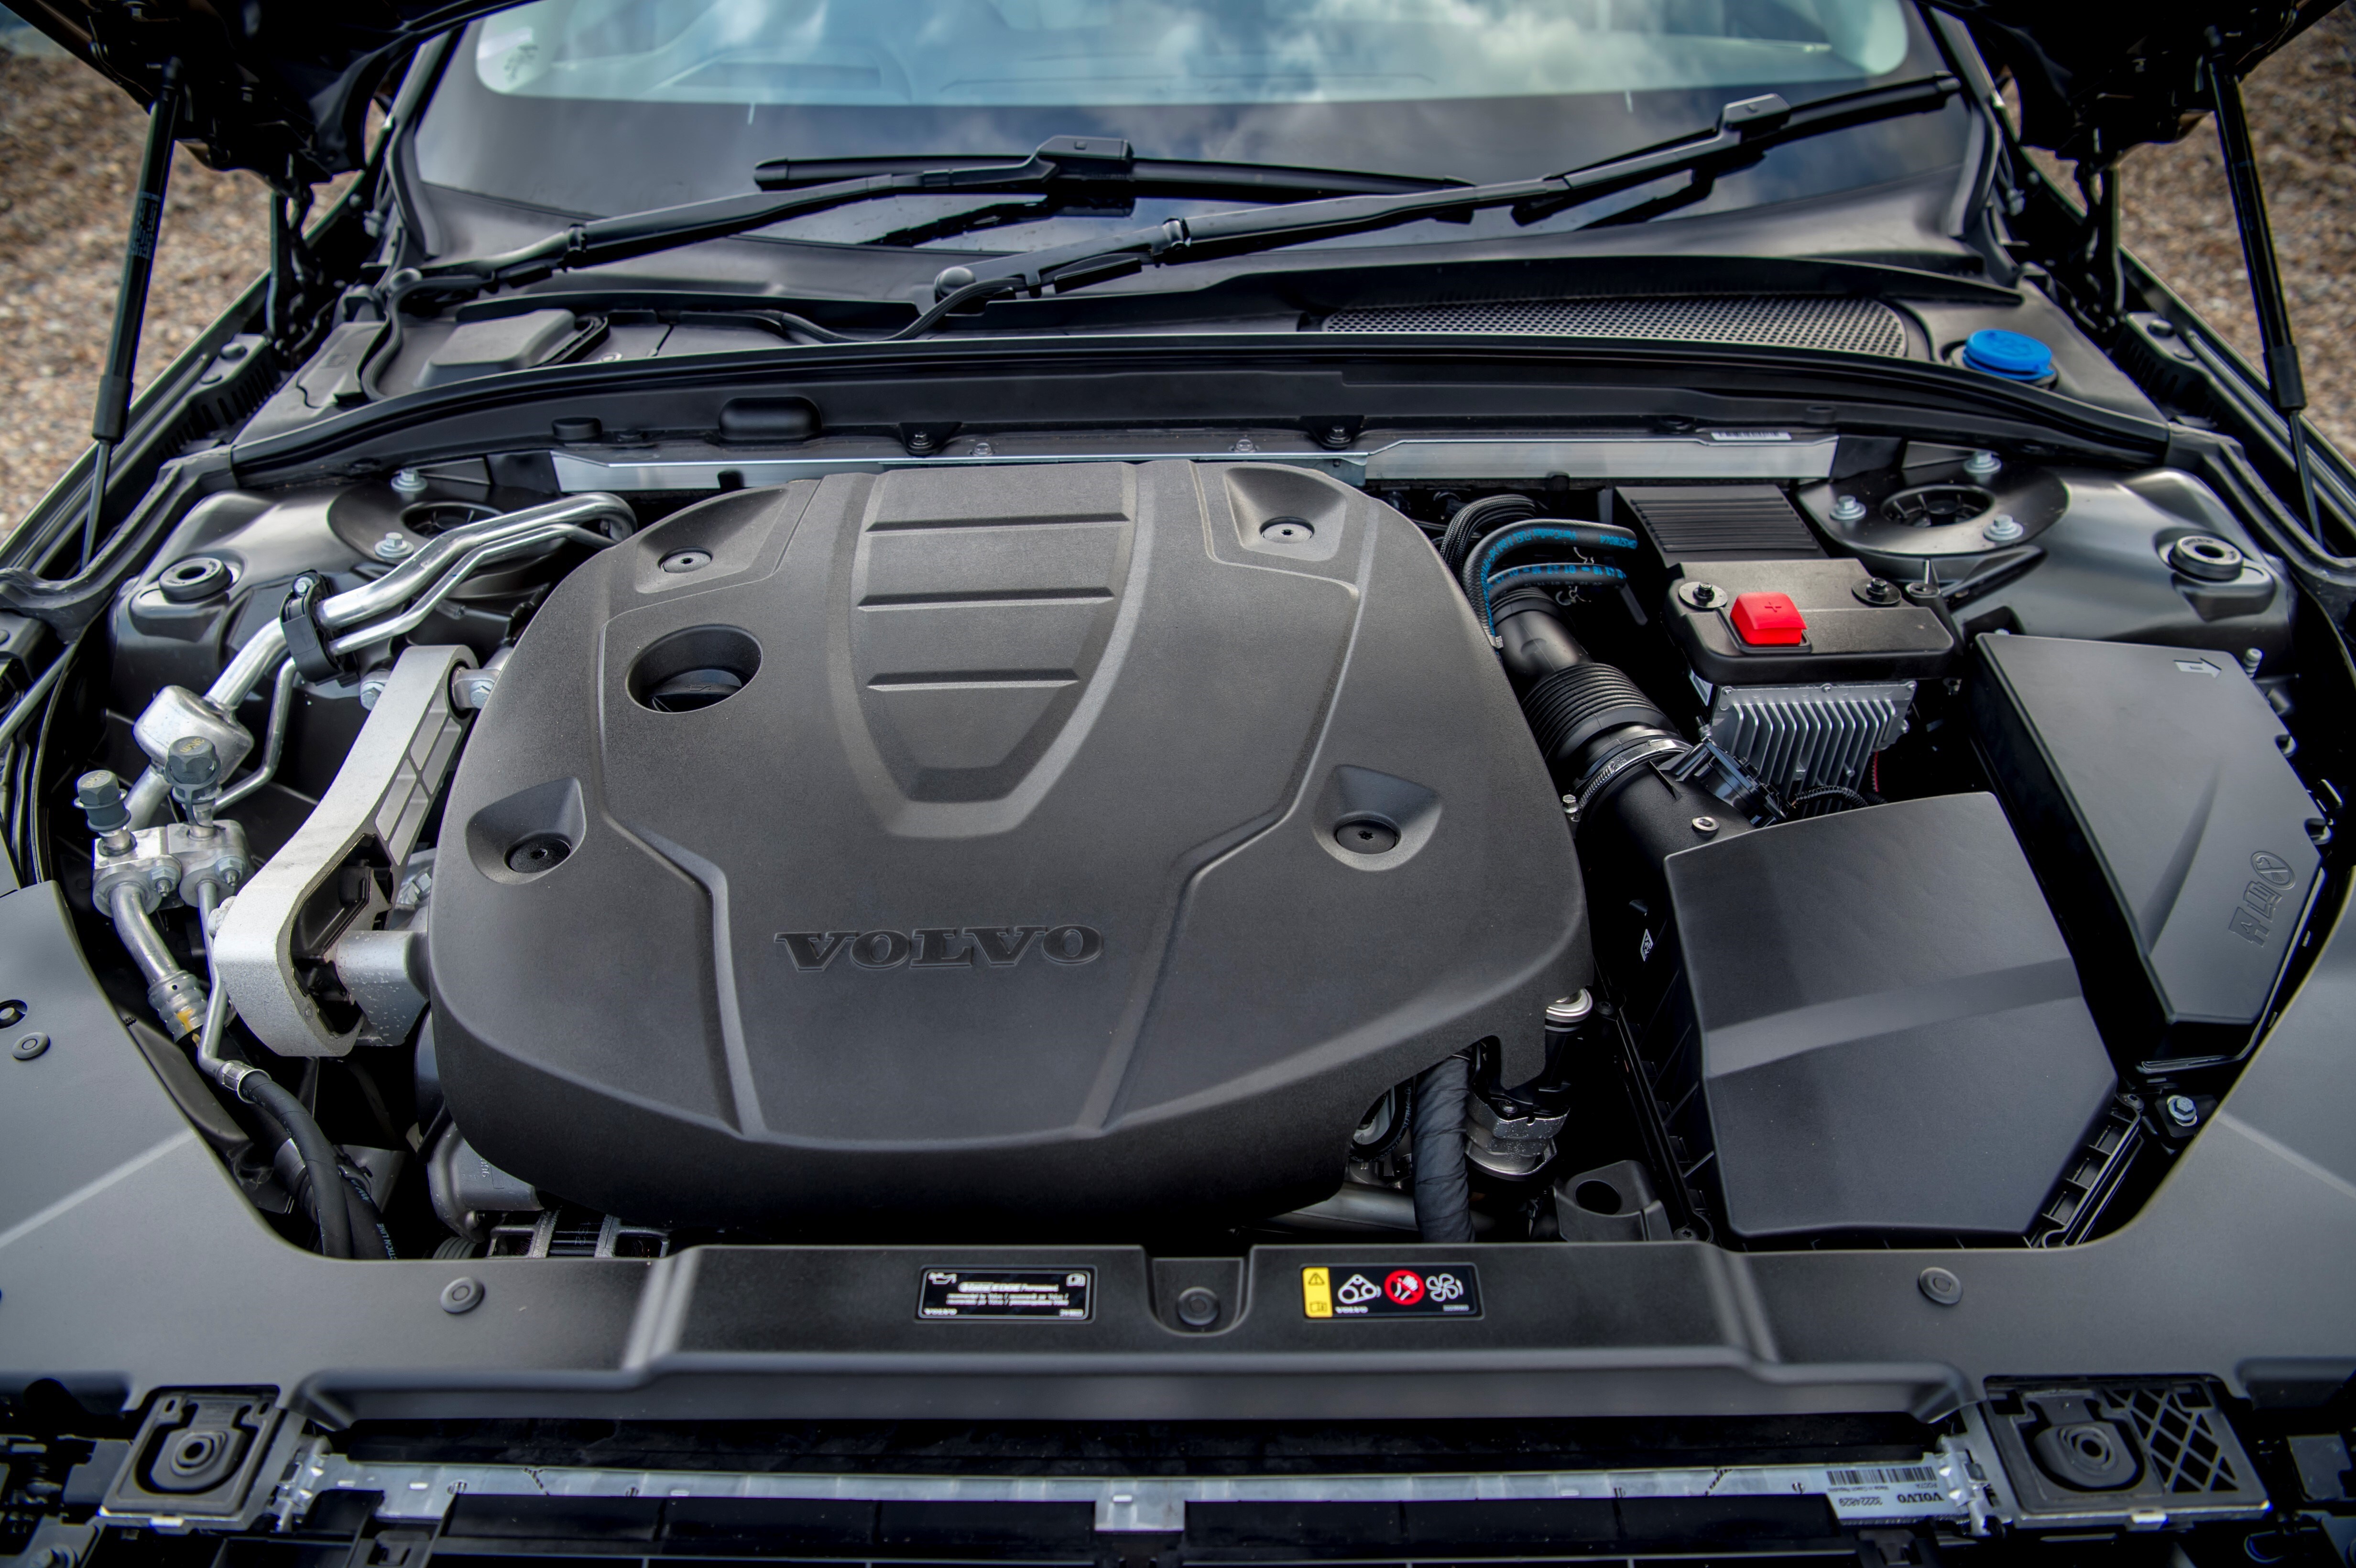 Volvo V60 Cross Country engine